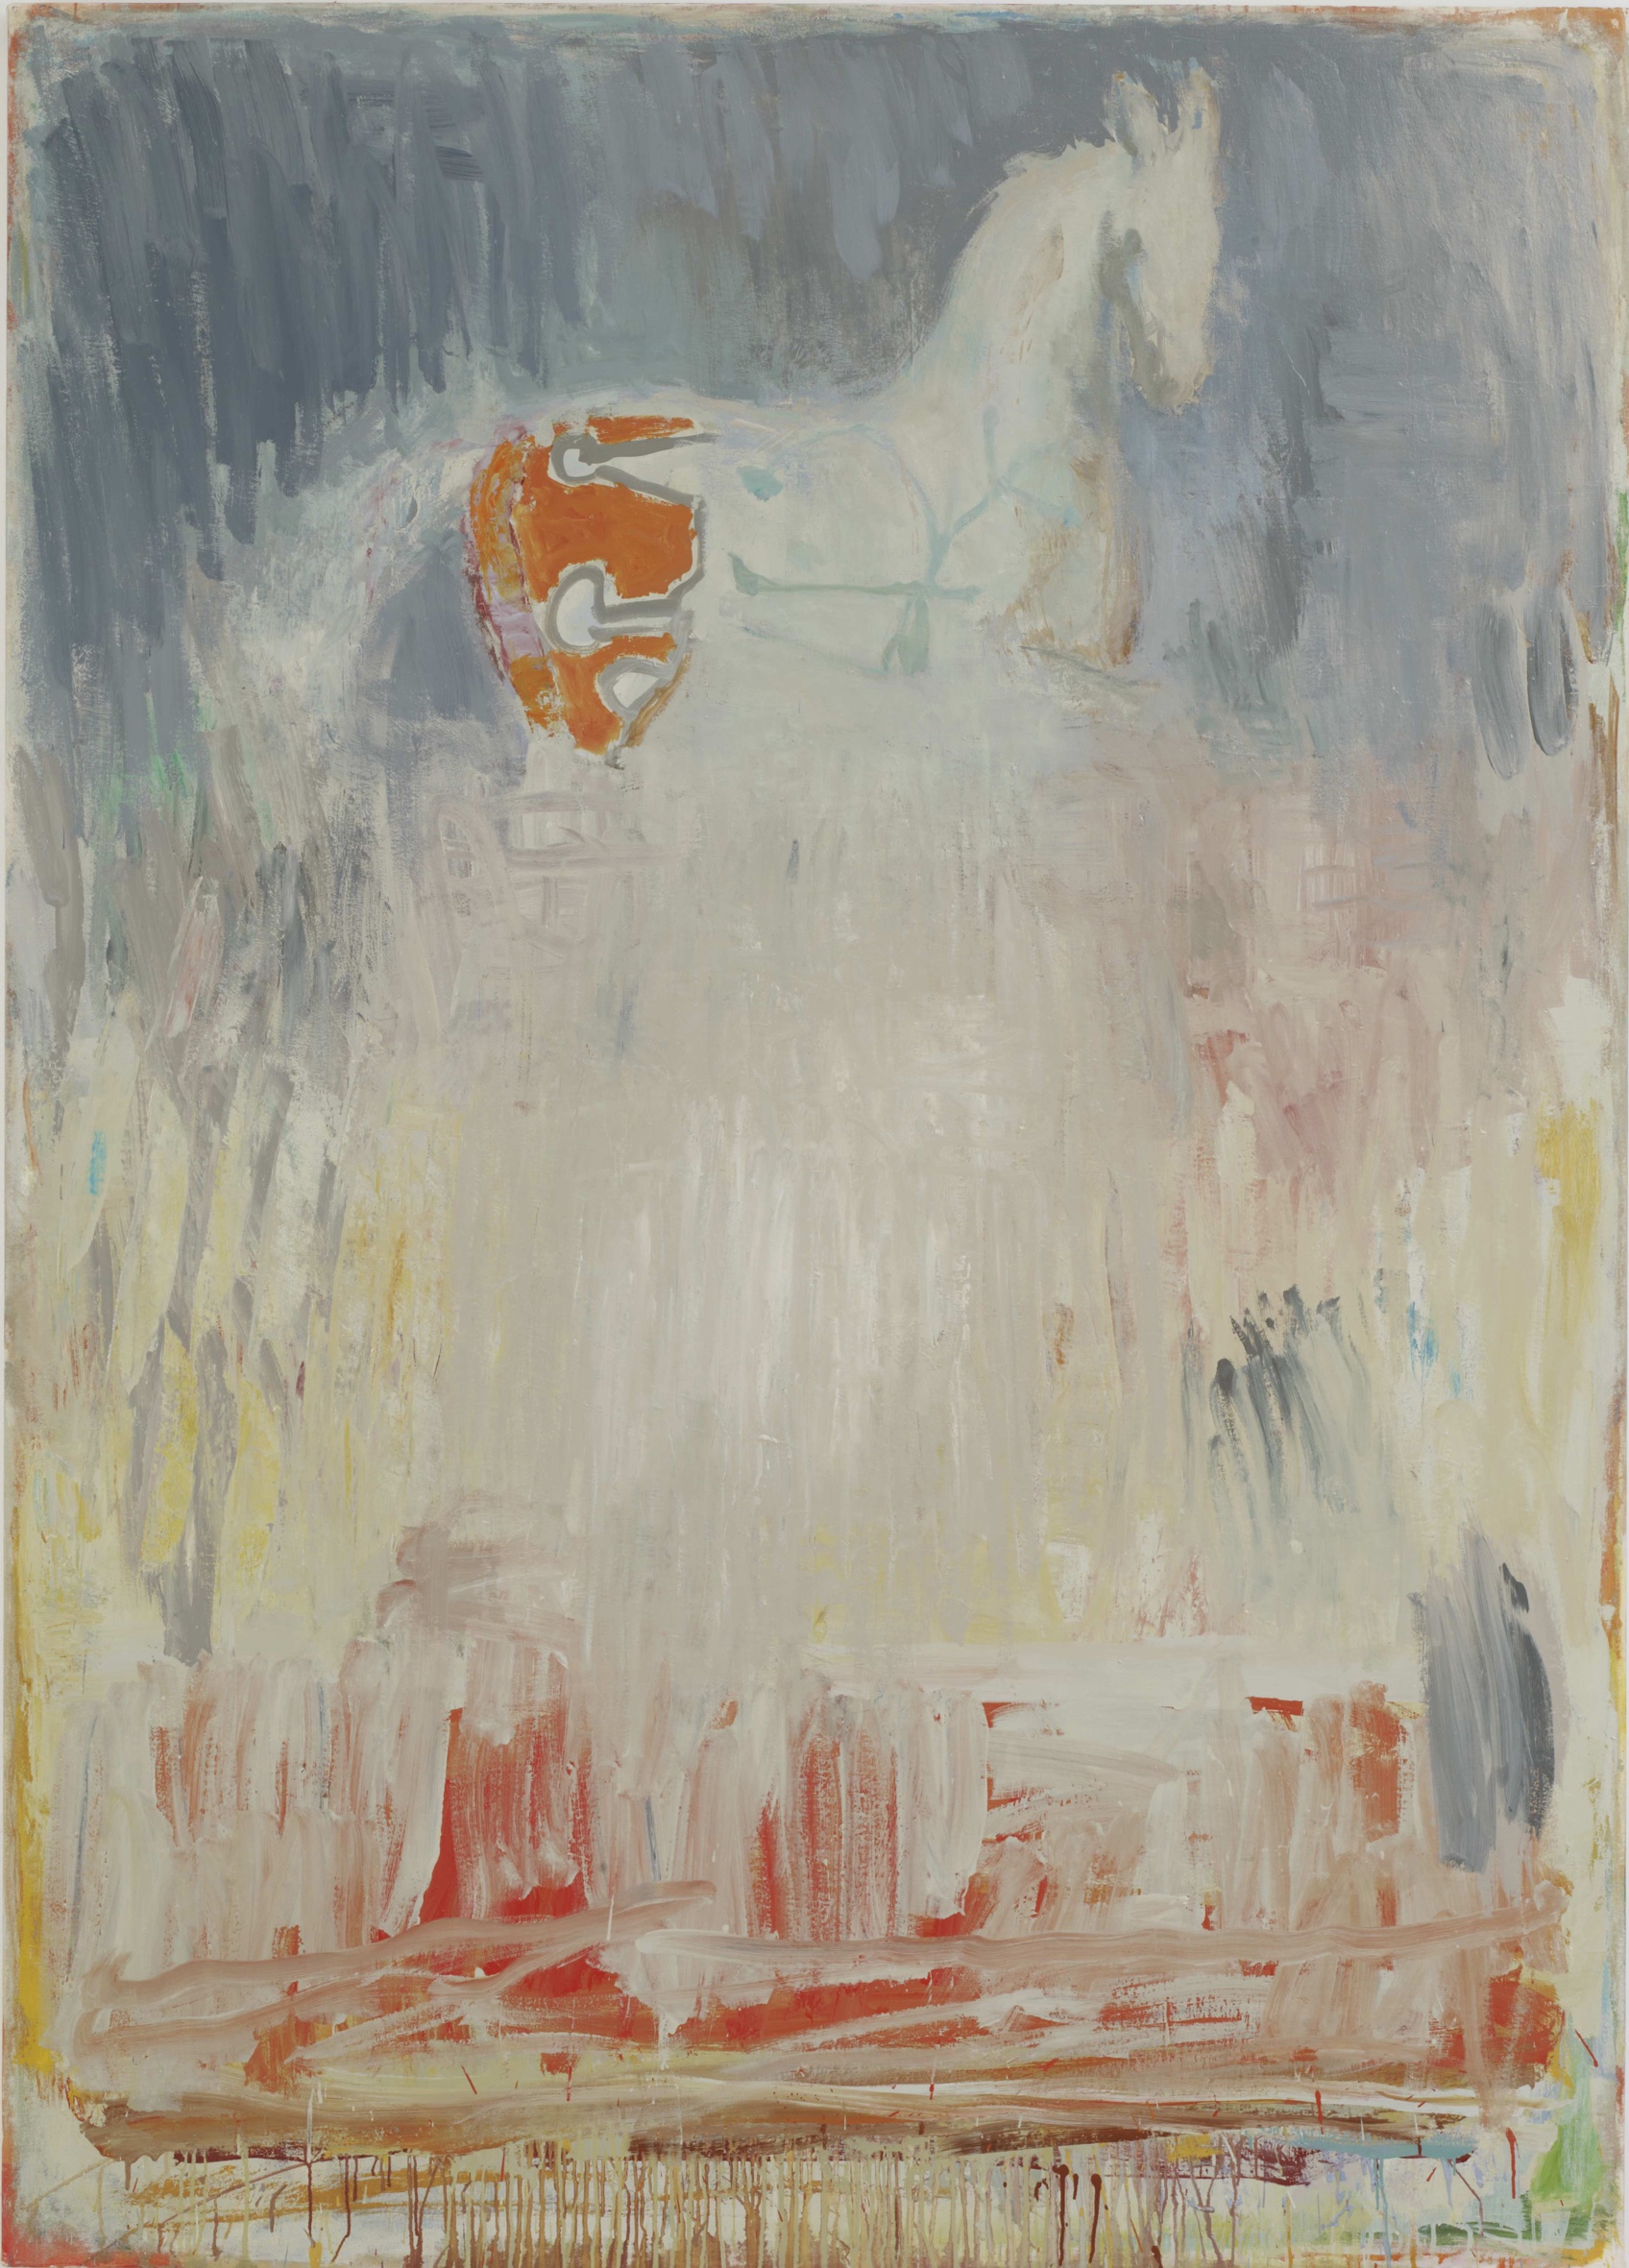 "Dido" 2011, pittura su tela, 210 x 150 cm